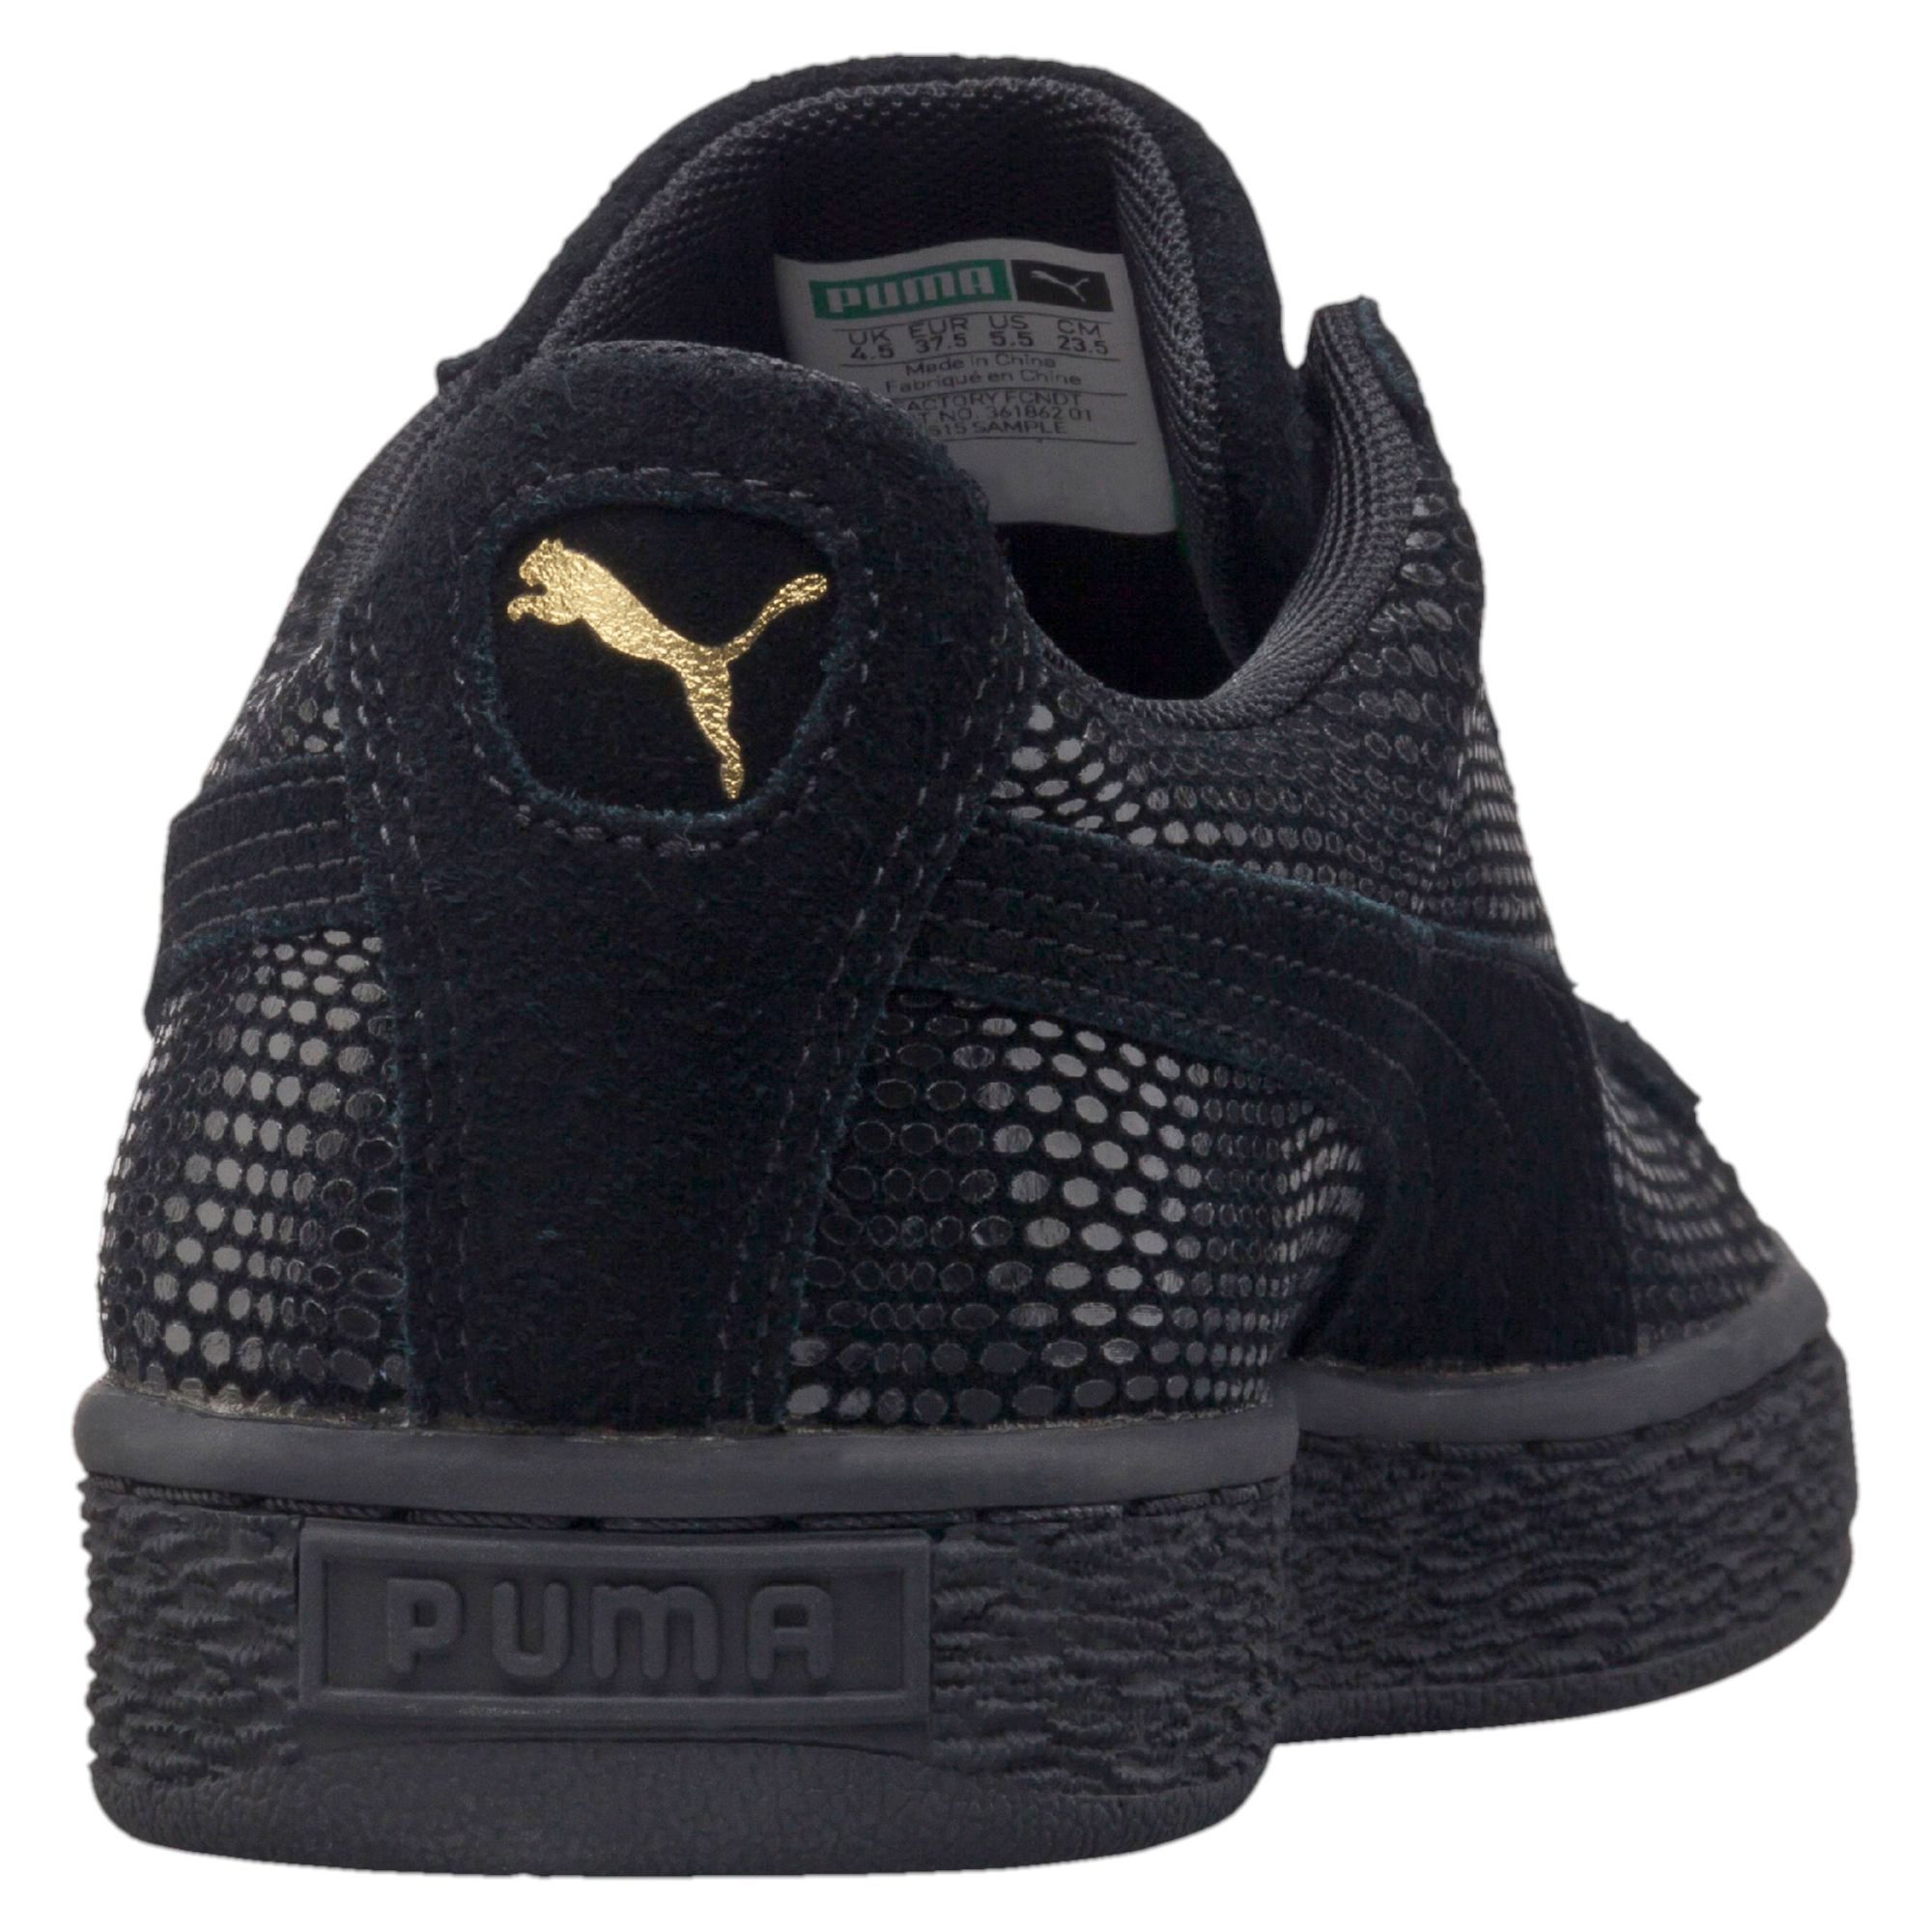 Puma Suede Gold black  361862-01